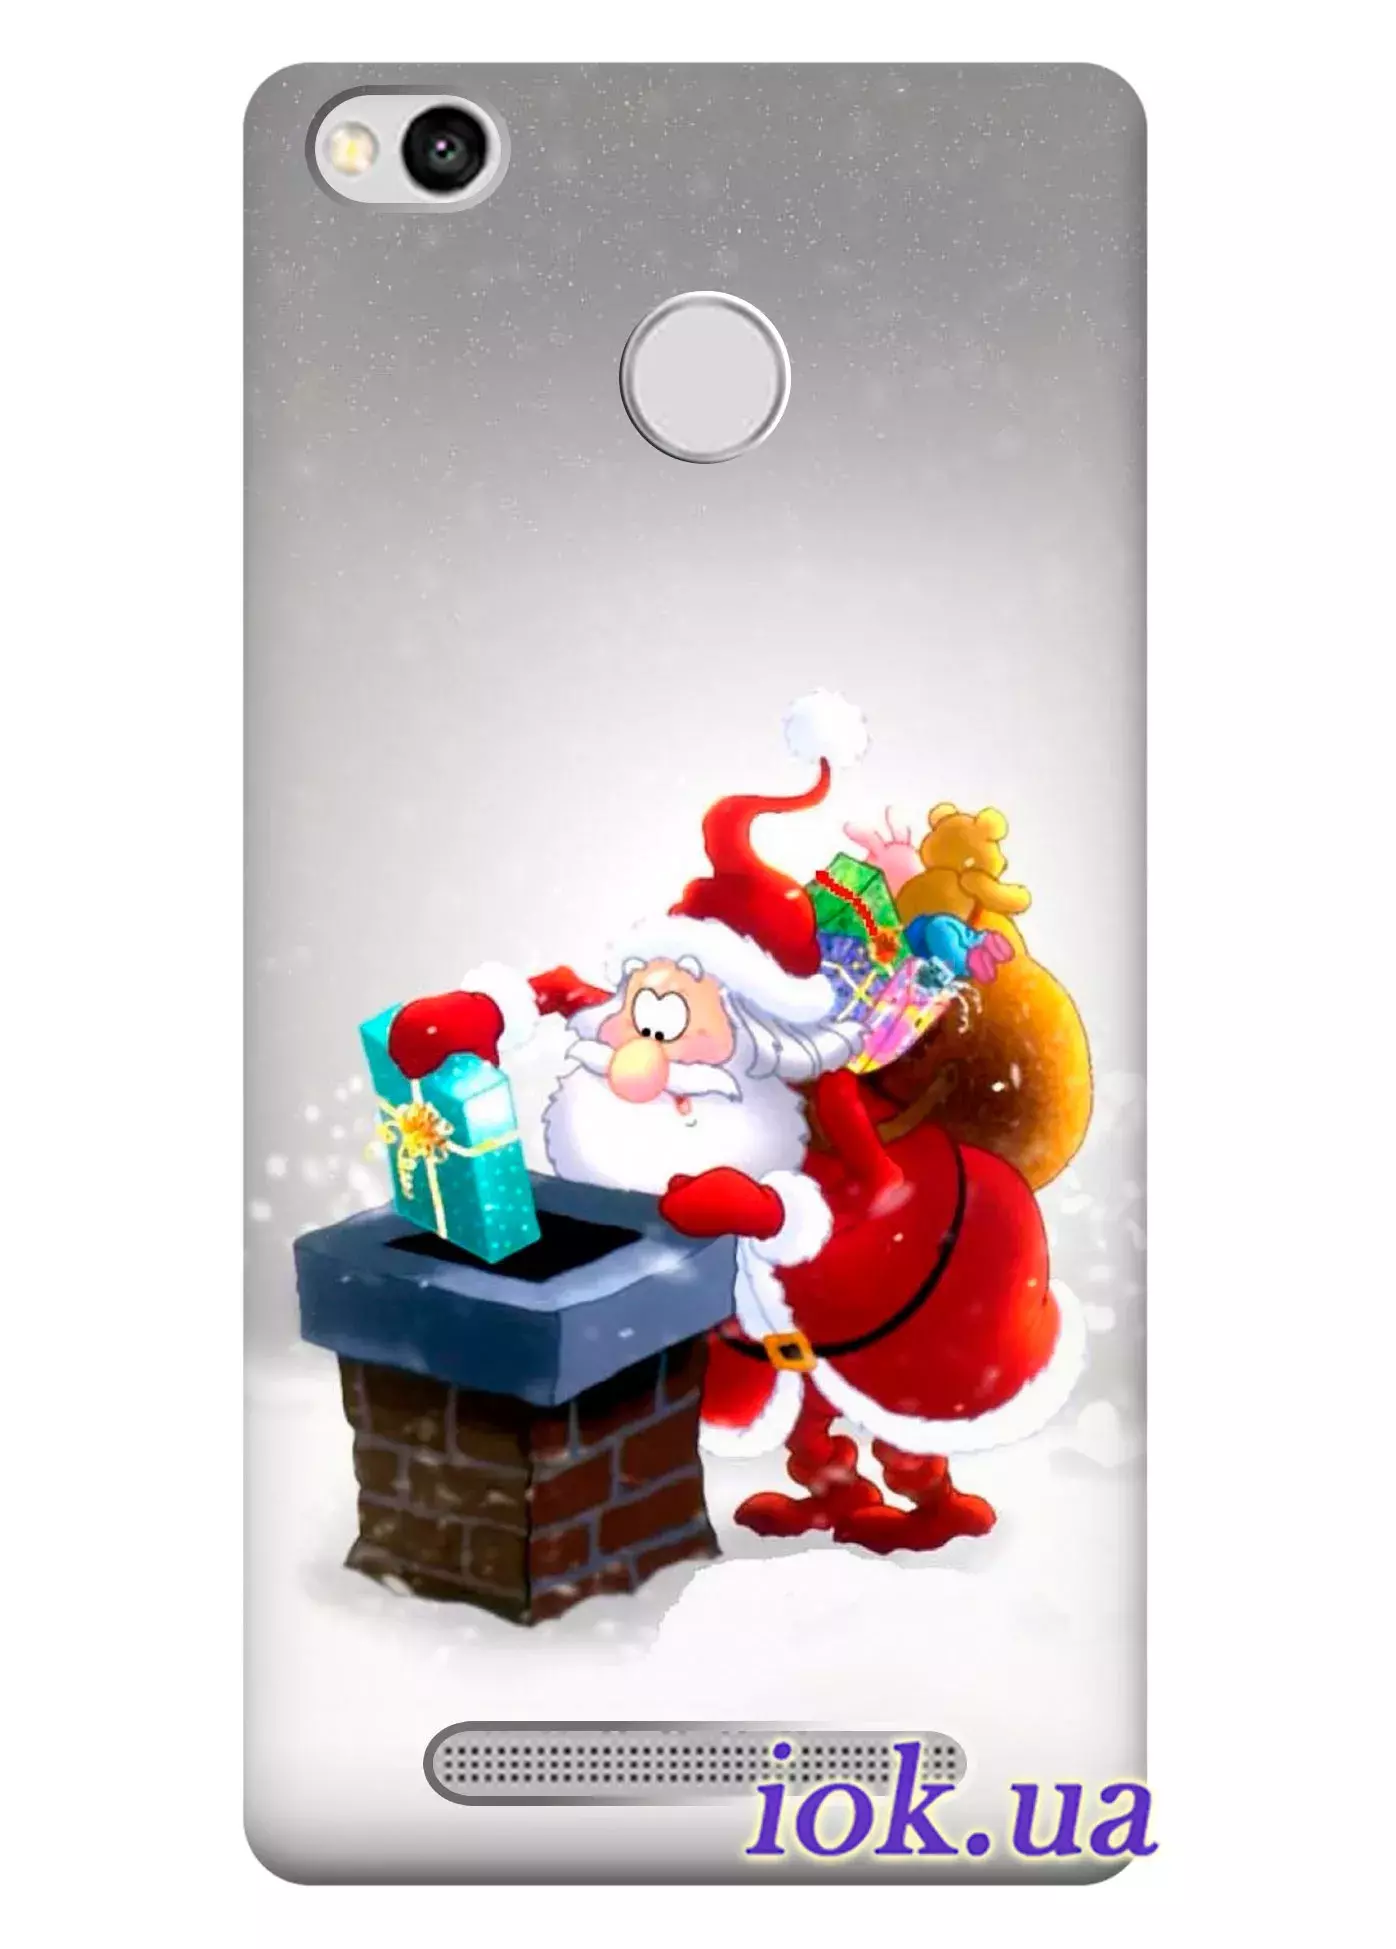 Xiaomi Redmi 3X - Санта с подарками